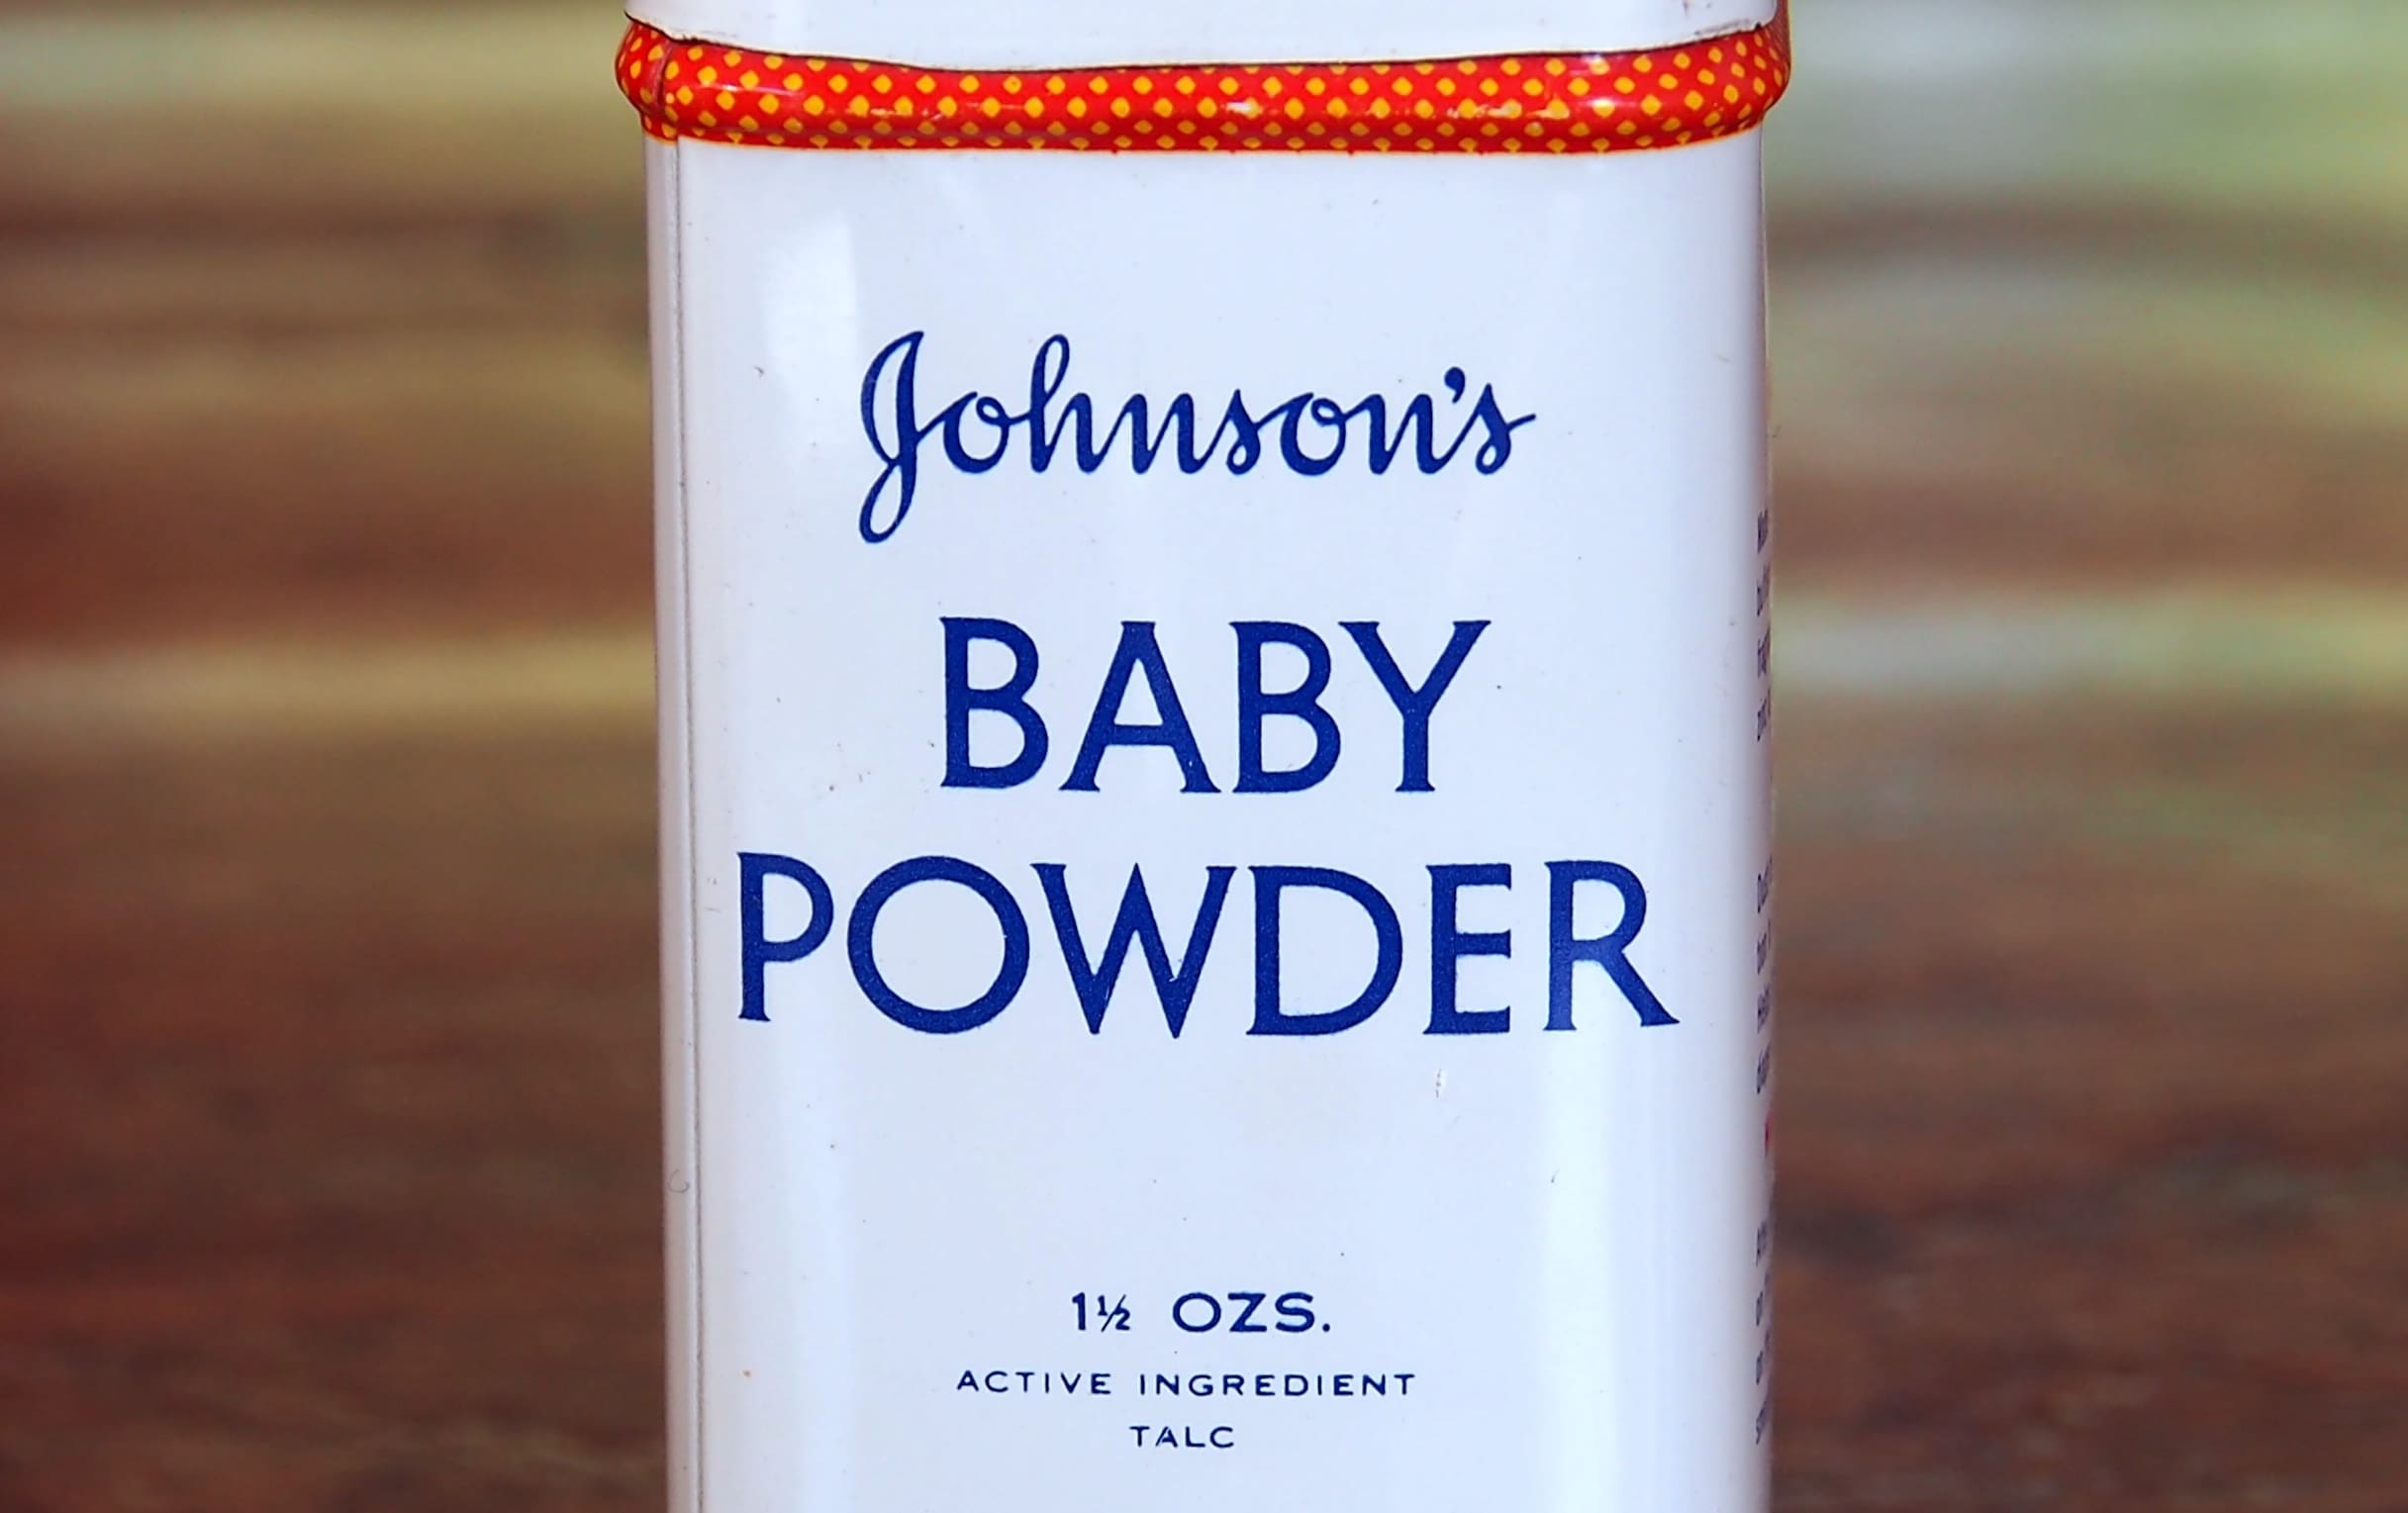 A new settlement regarding Johnson & Johnson baby powder would give Delaware $4.9 million. Wikimedia Commons photo.